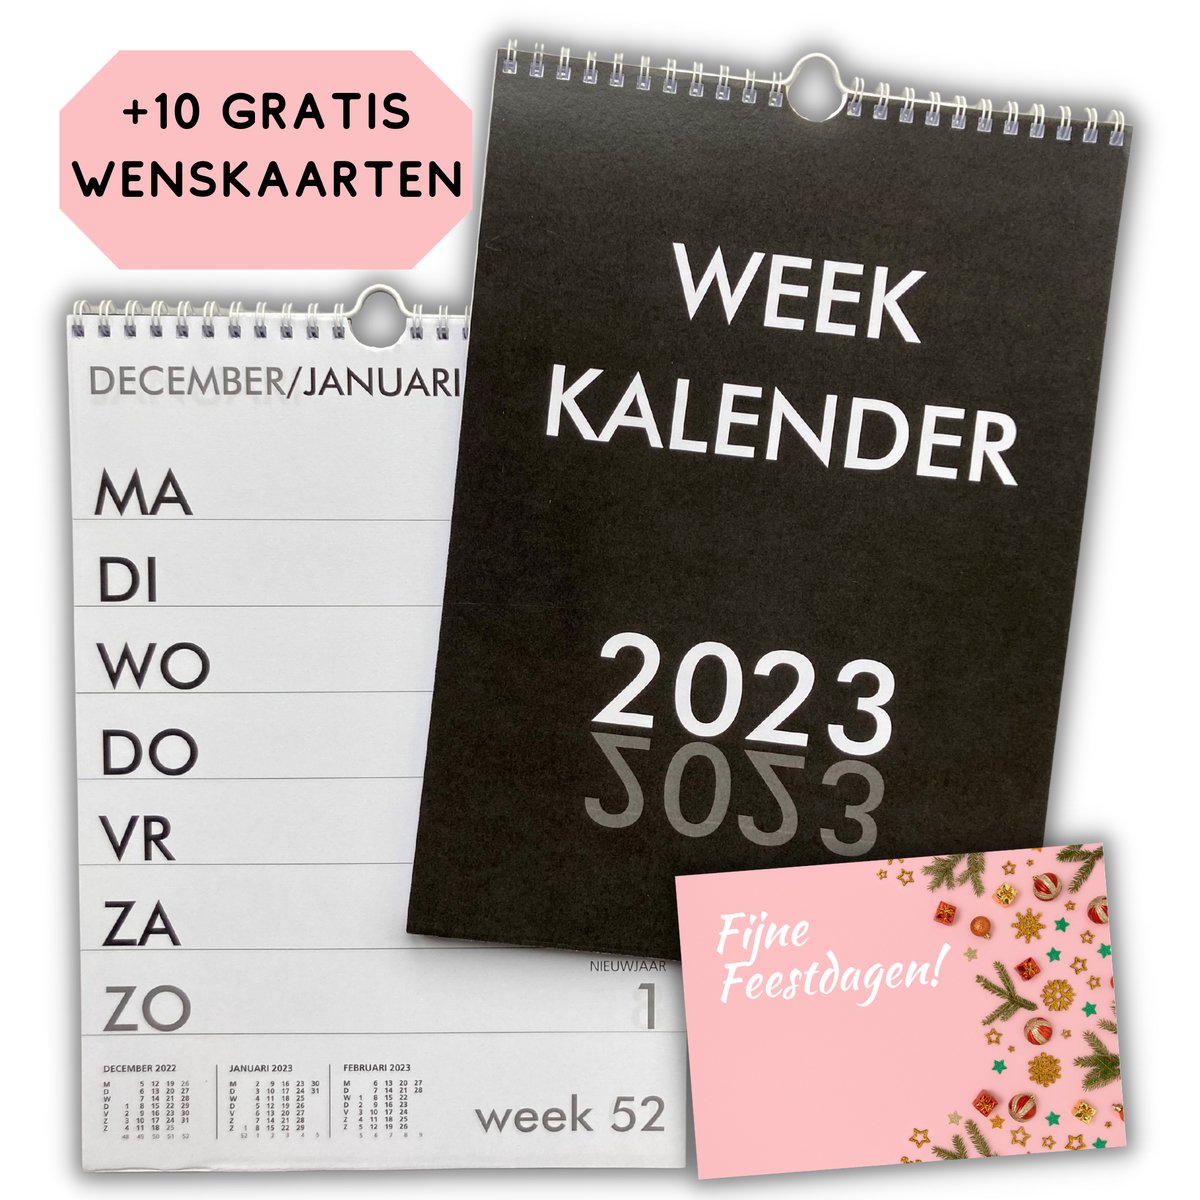 GROOT LETTER - Weekkalender 2023 - Wandkalender - Ophangbaar - A4 formaat - 10 Gratis WENSKAARTEN